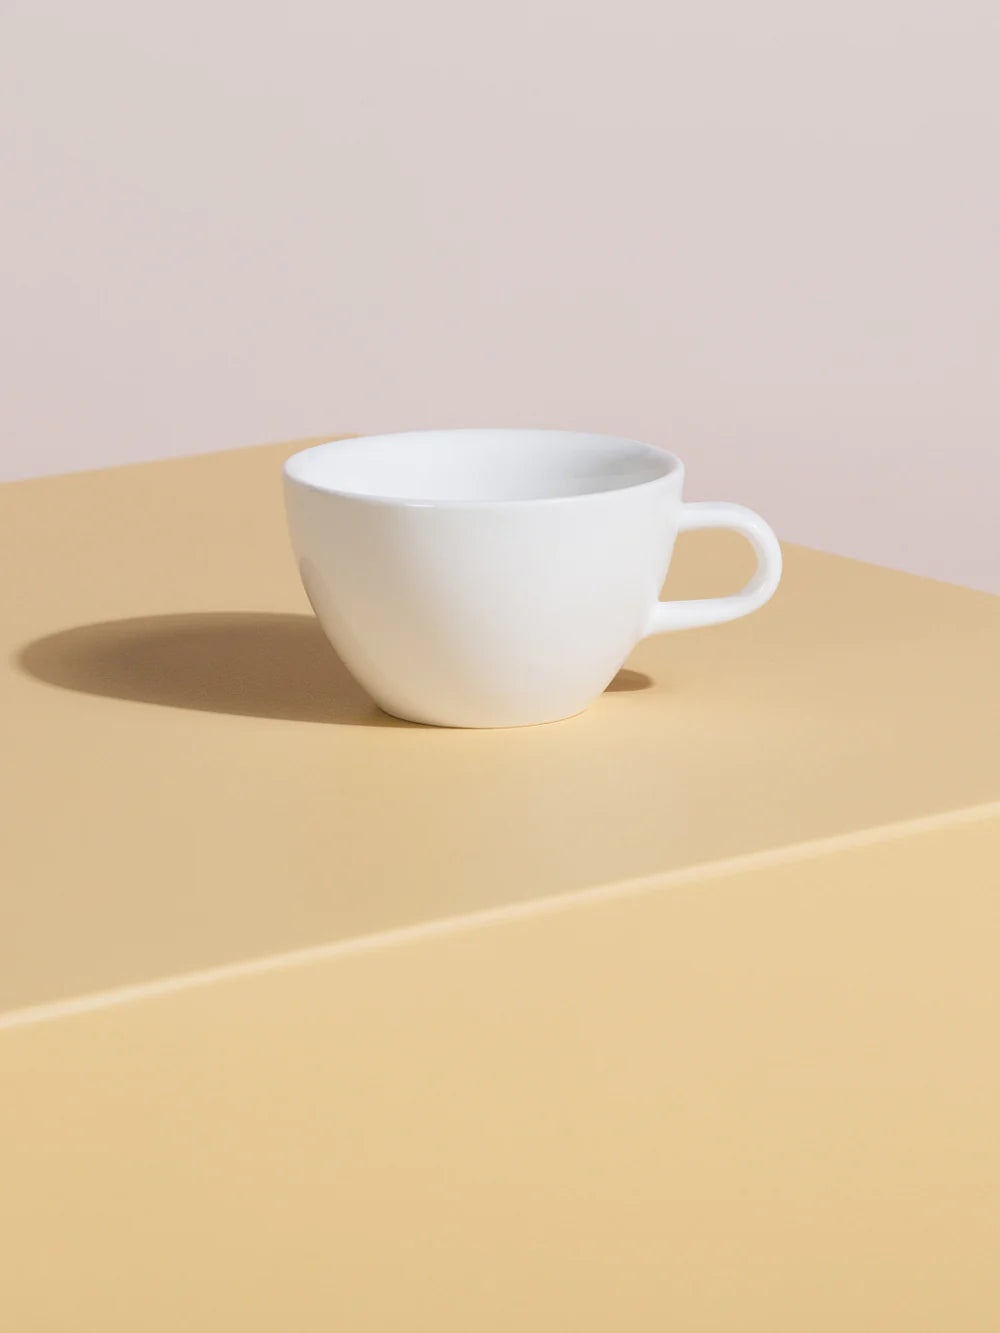 ACME - Espresso Latte Cup (280ml/9.47oz)